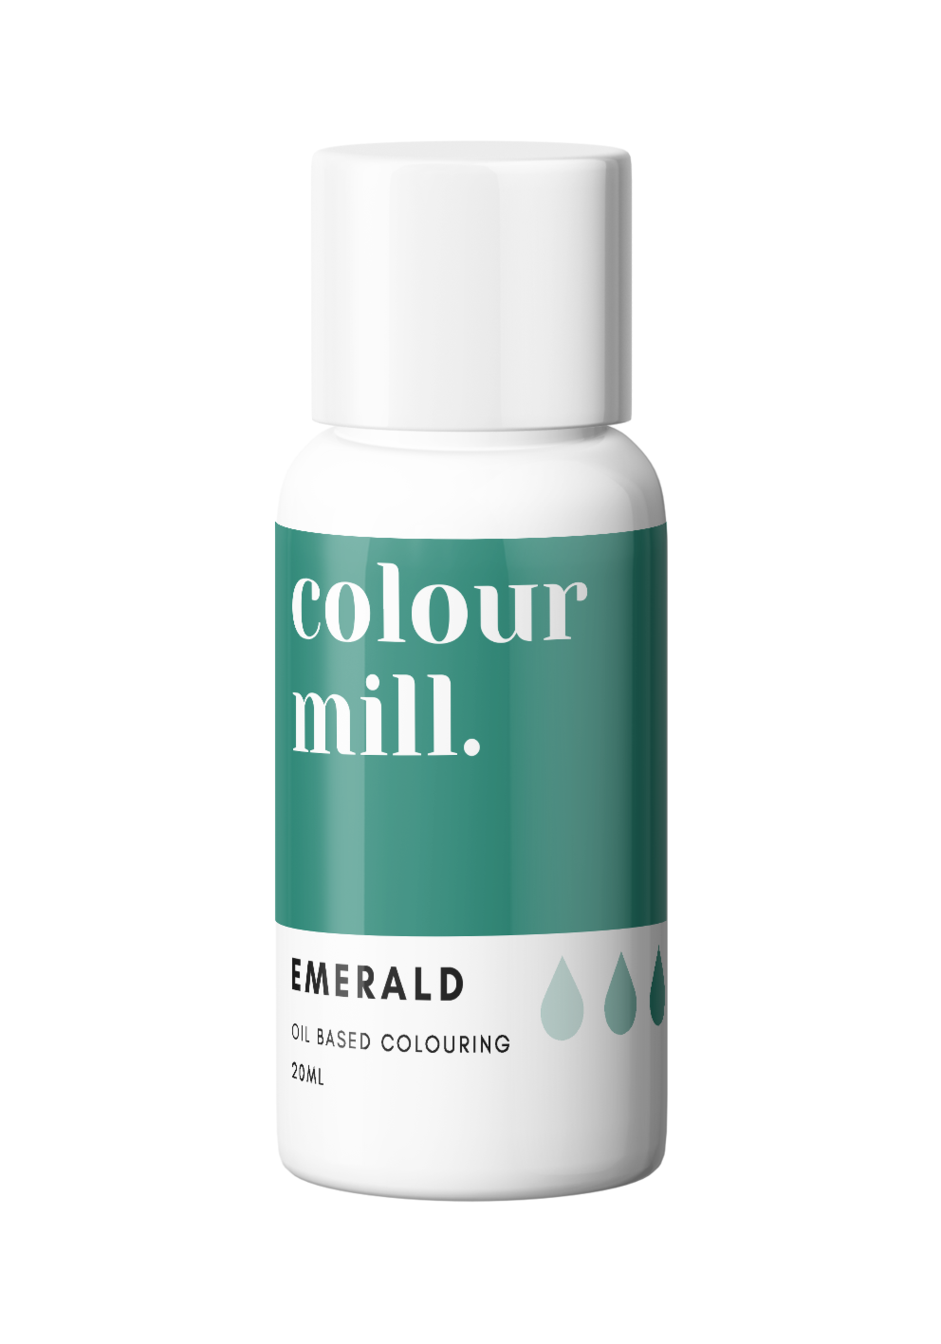 Emerald, 20ml, Colour Mill Oil Based Colouring